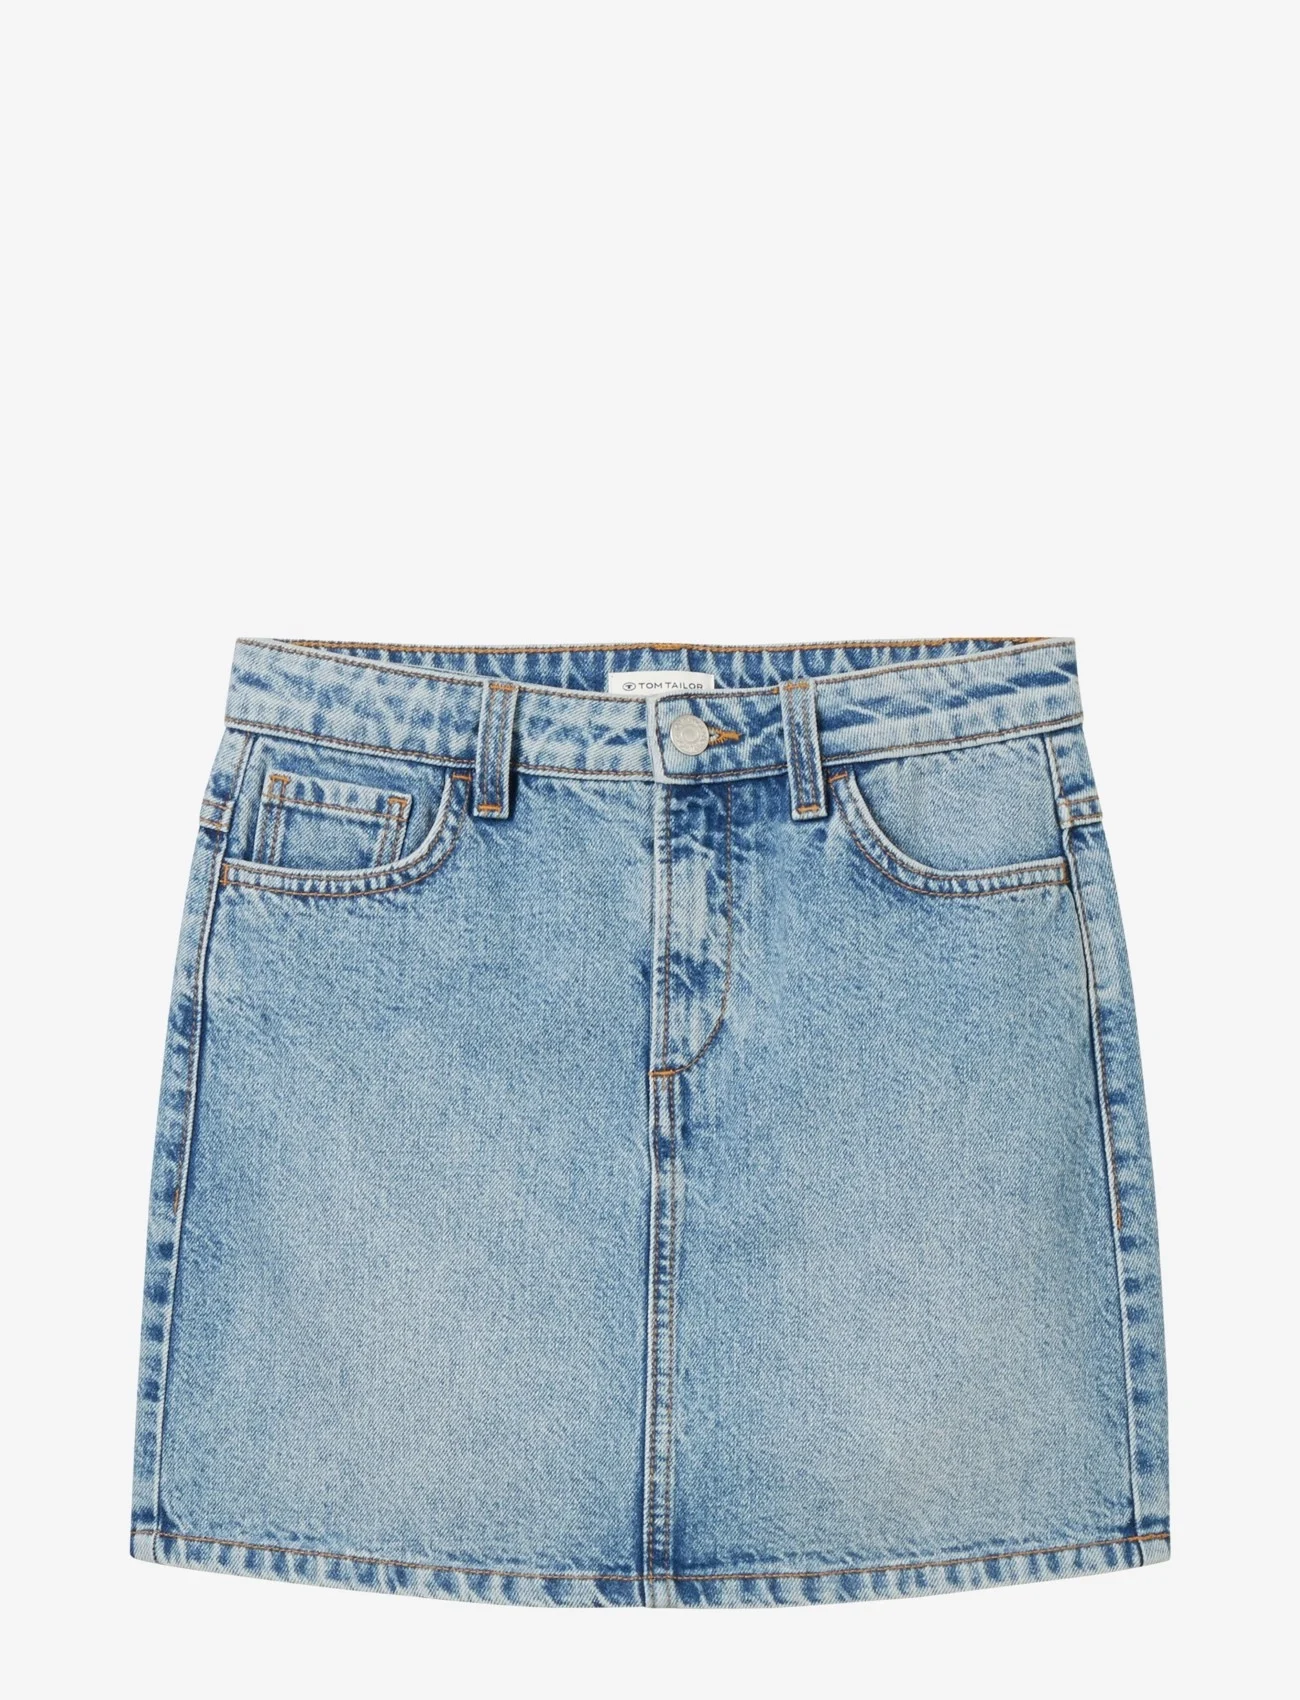 Tom Tailor - denim mini skirt - jeansröcke - used light stone blue denim - 0